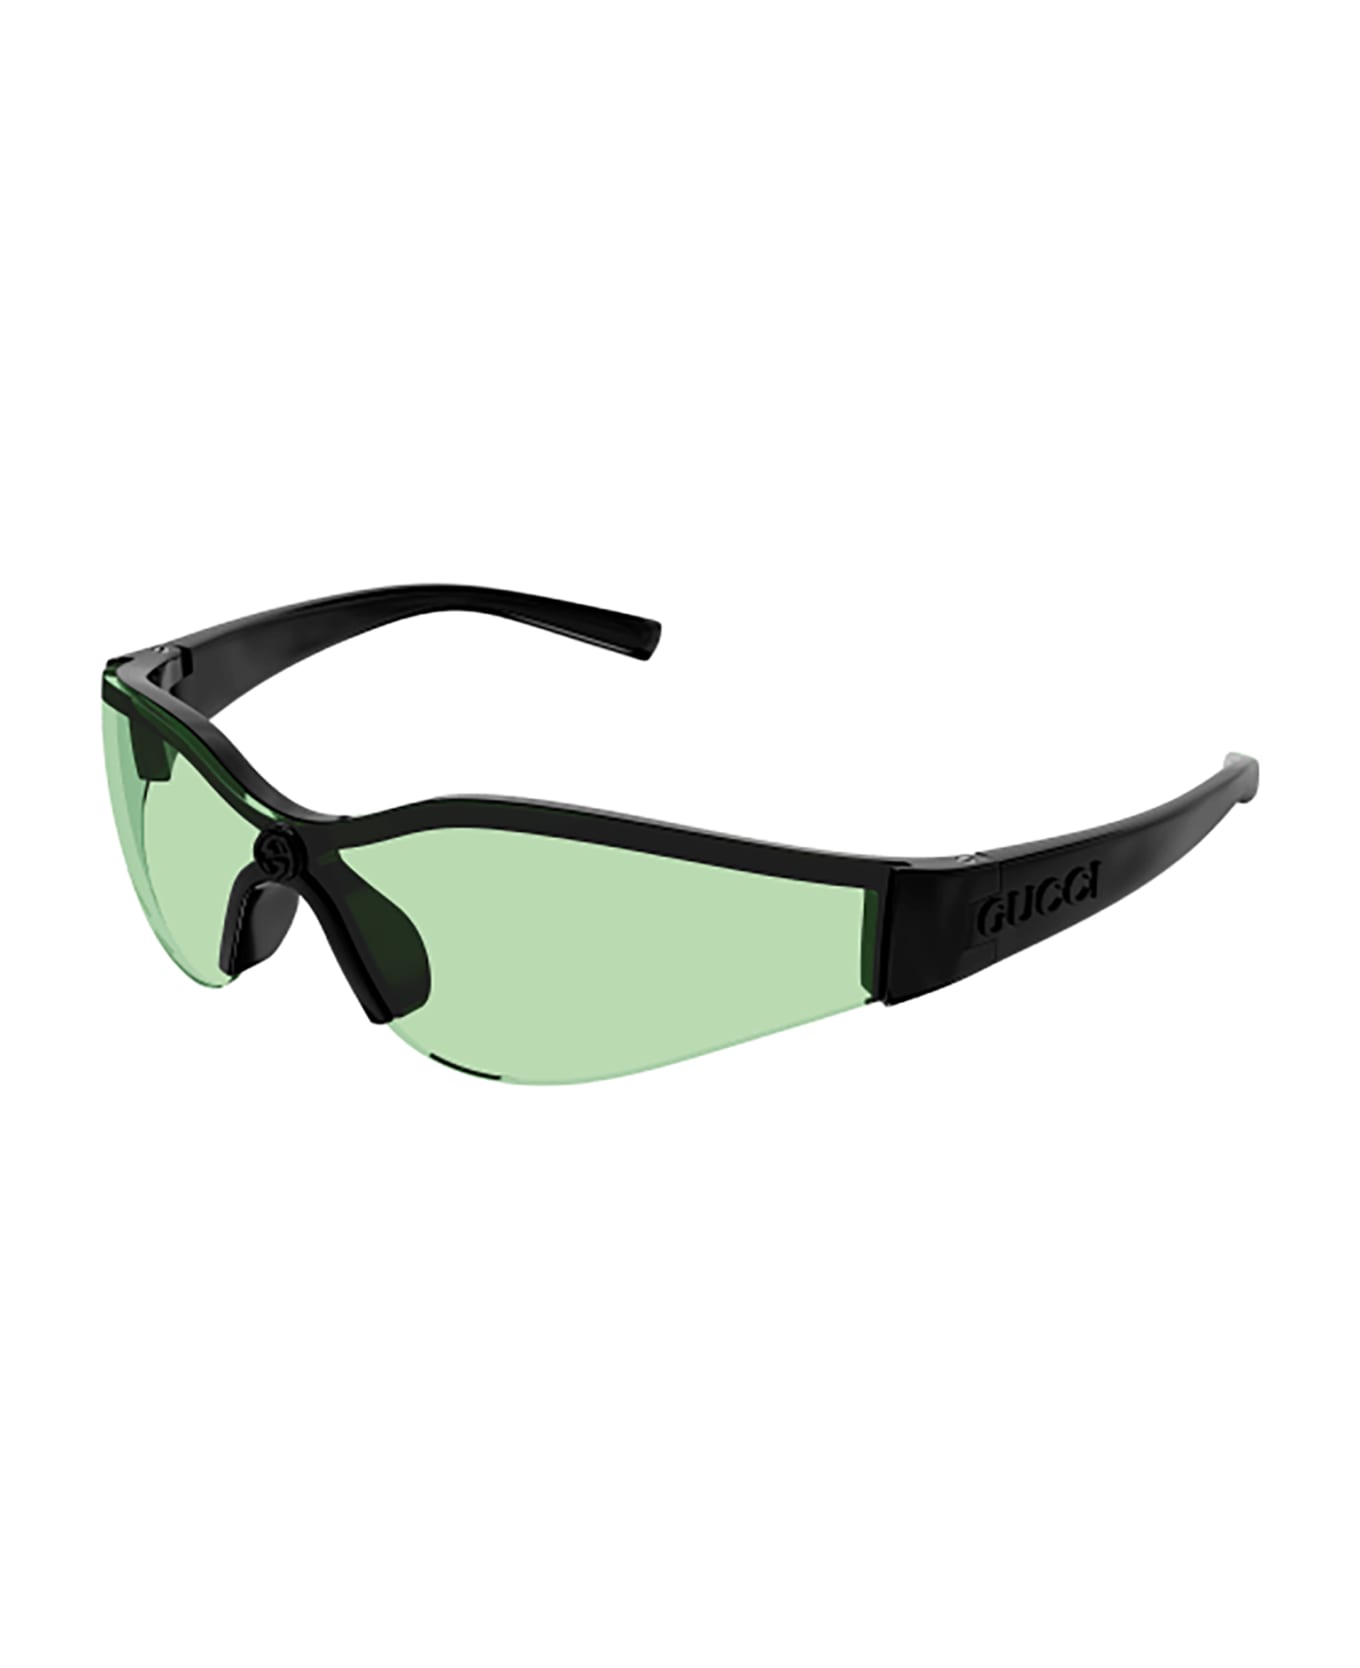 Gucci Eyewear GG1651S Sunglasses - Black Black Green